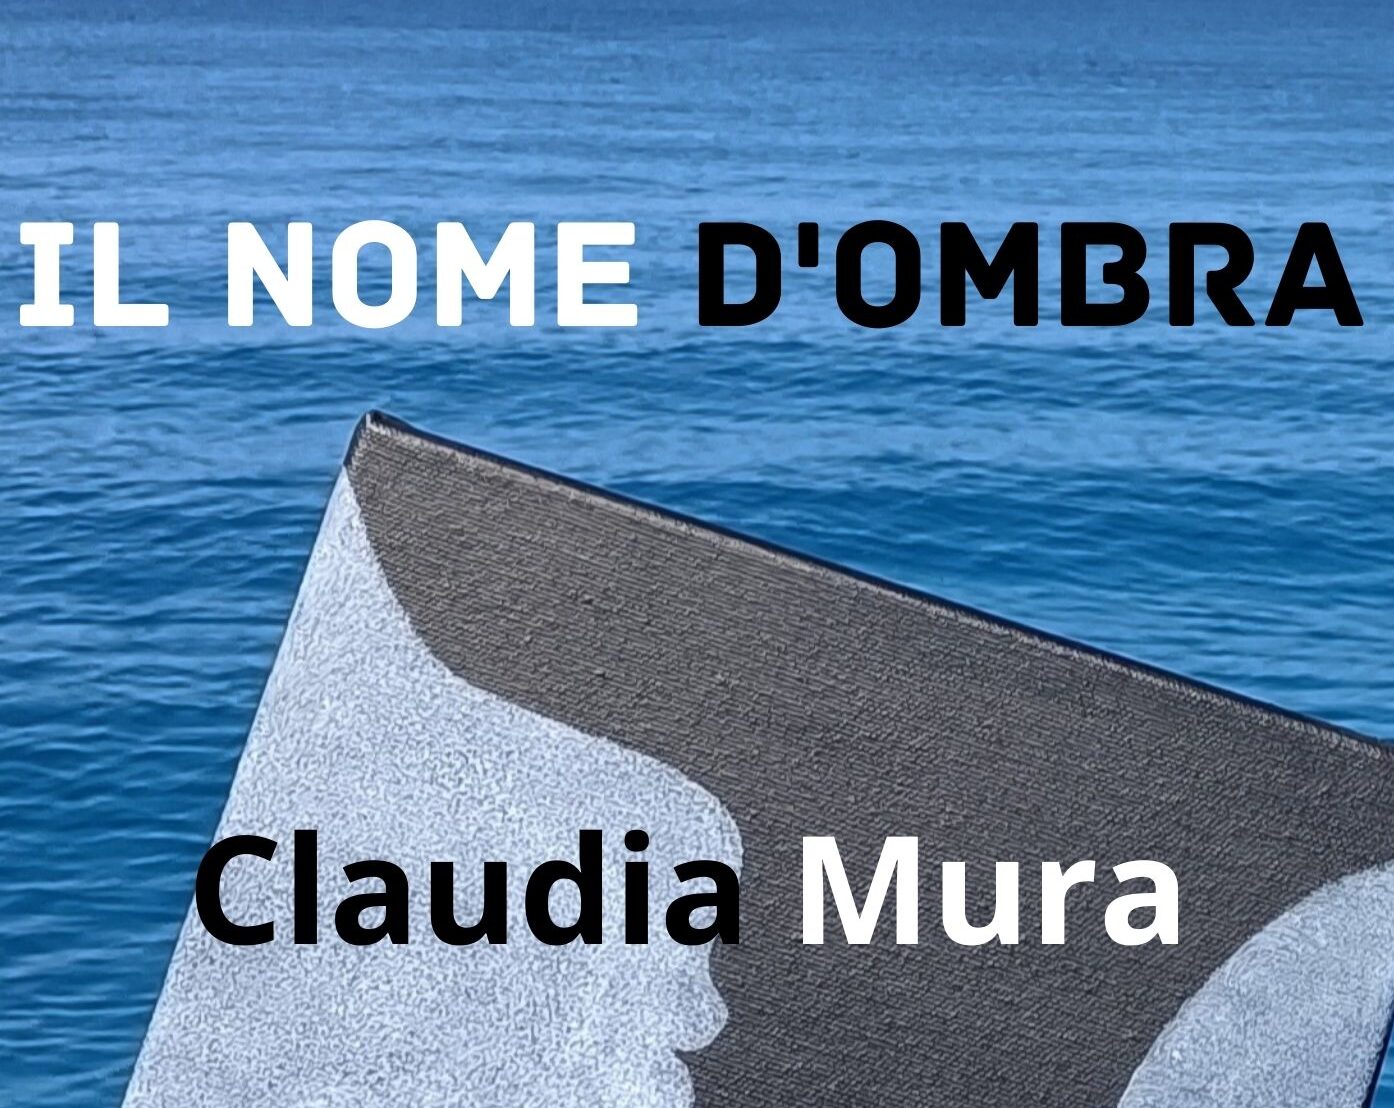 Copertina romanzo di Claudia Mura